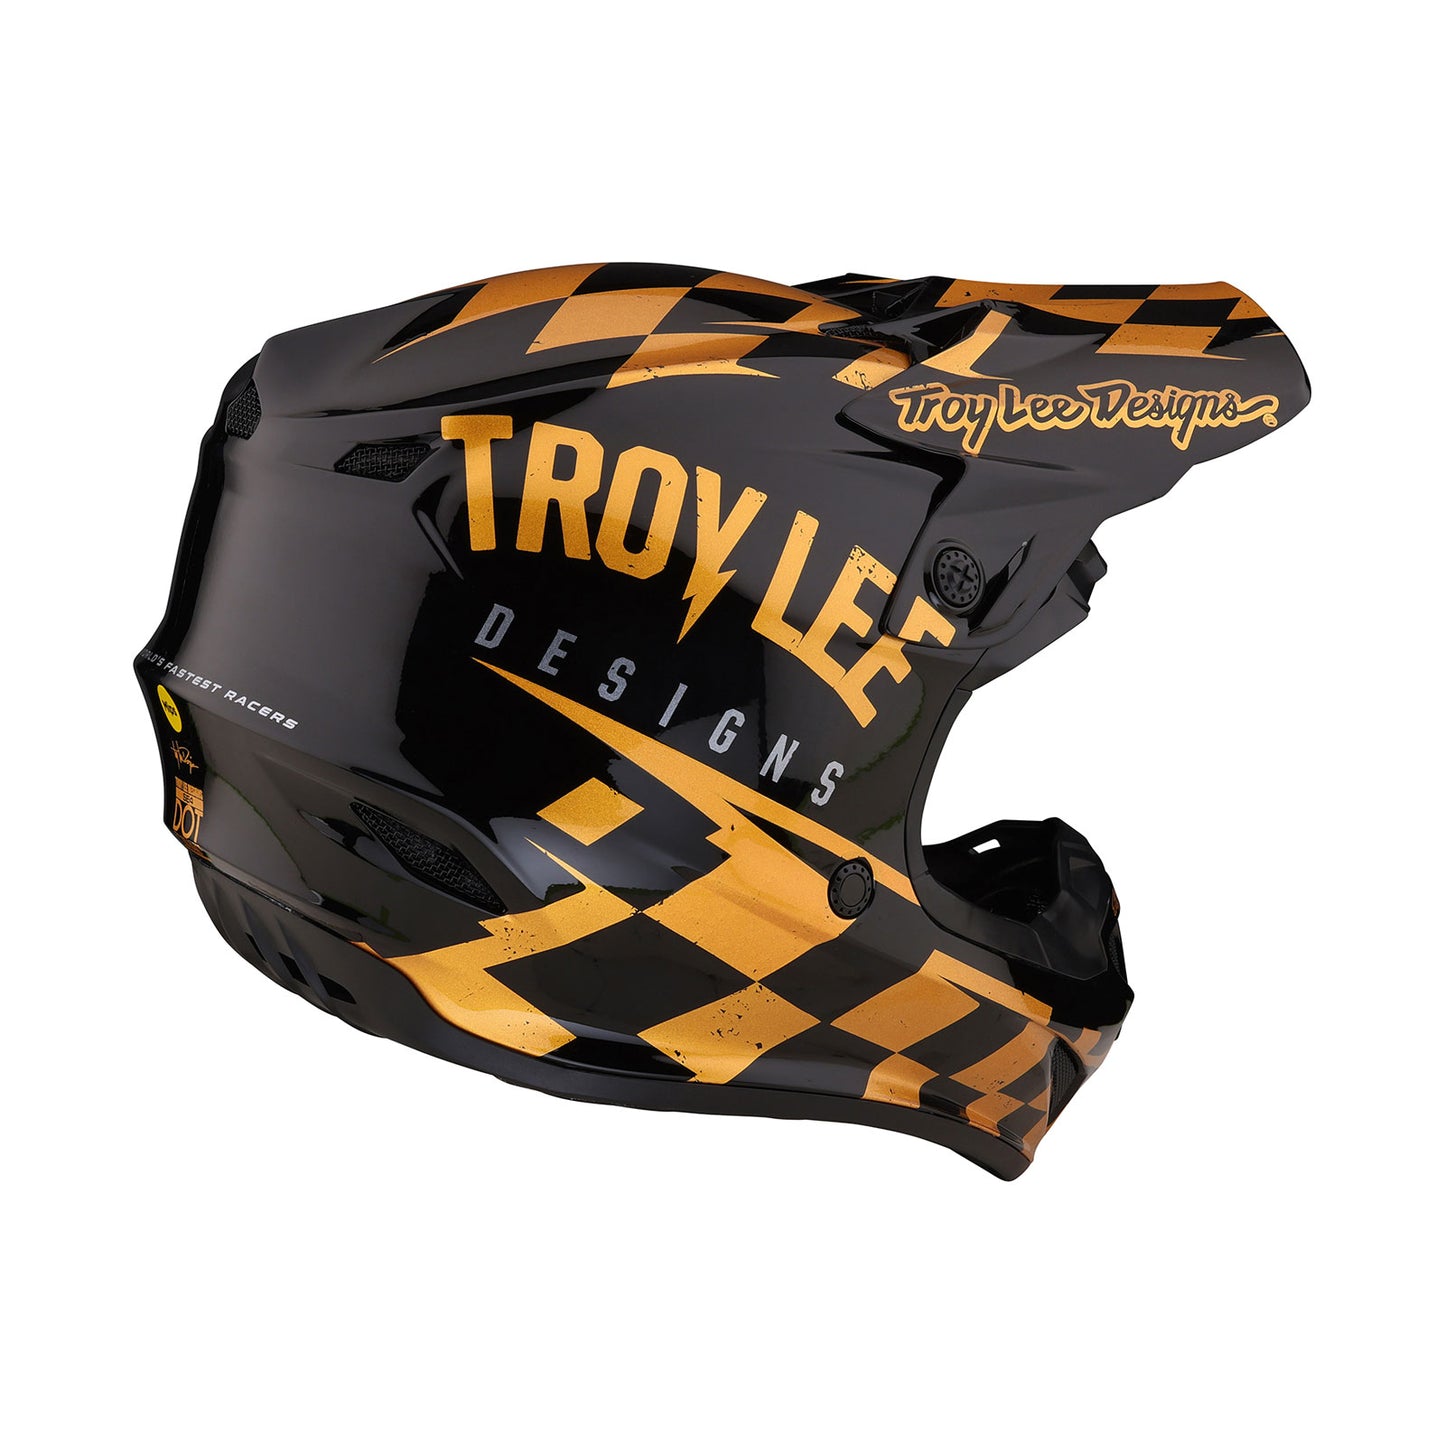 SE4 Polyacrylite Helmet Race Shop Black / Gold